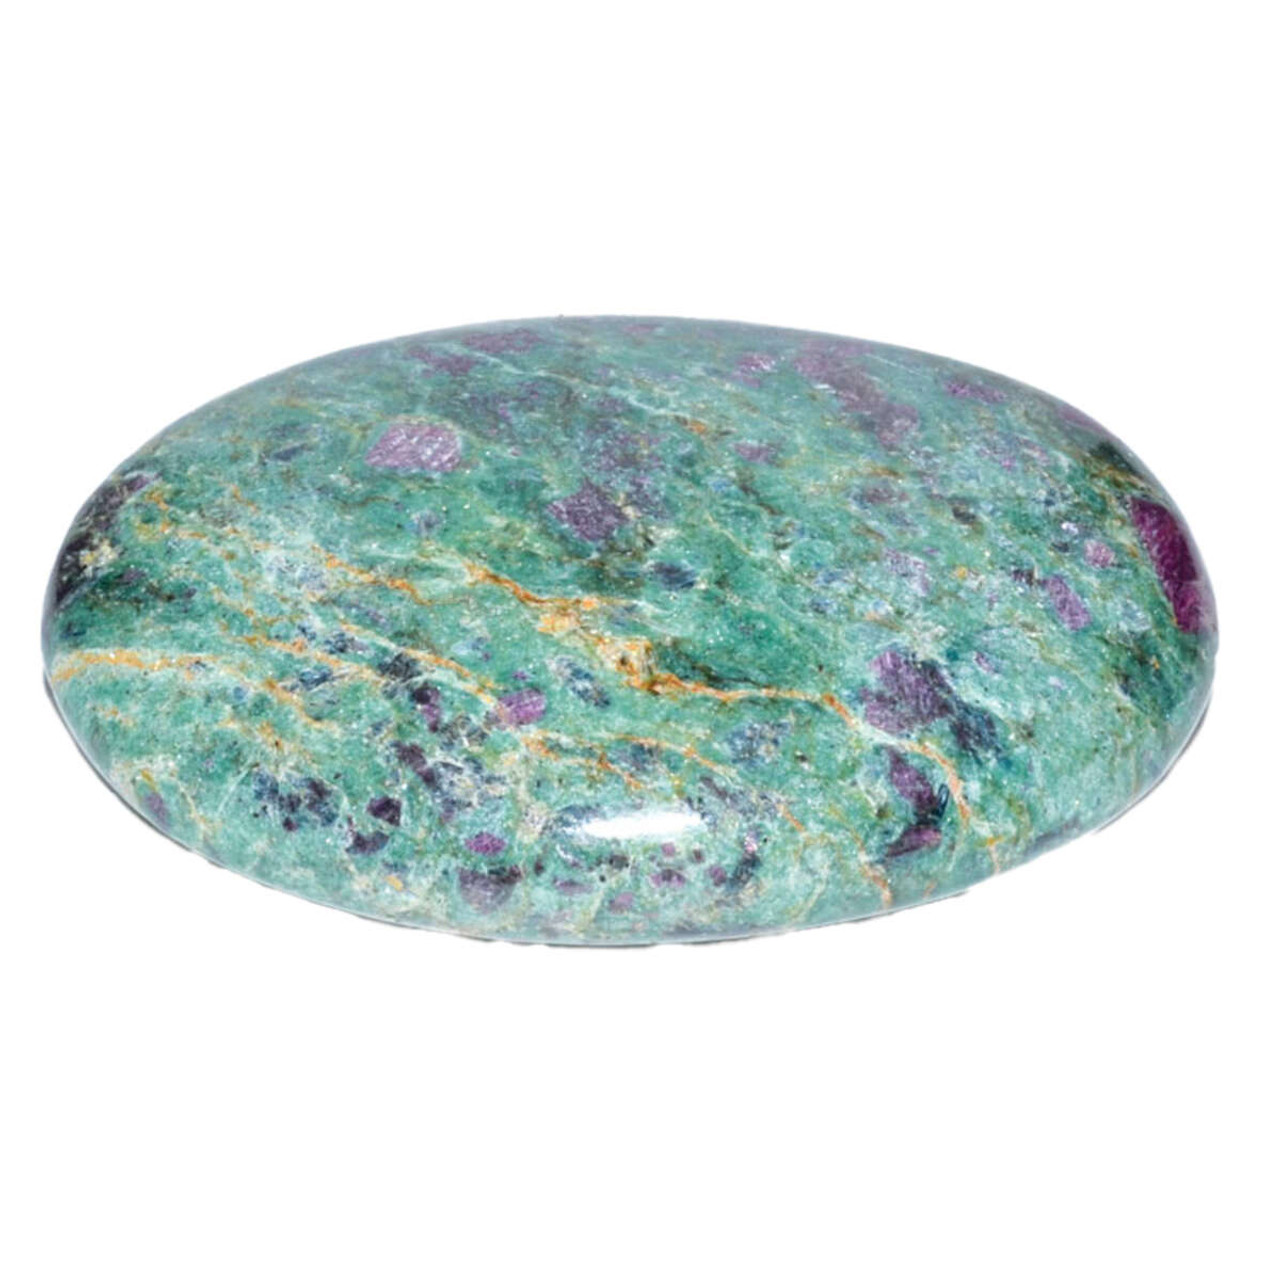 1 lb Bulk Chrysocolla Tumbled Polished Stones for Crafts Reiki Crystal  Healing